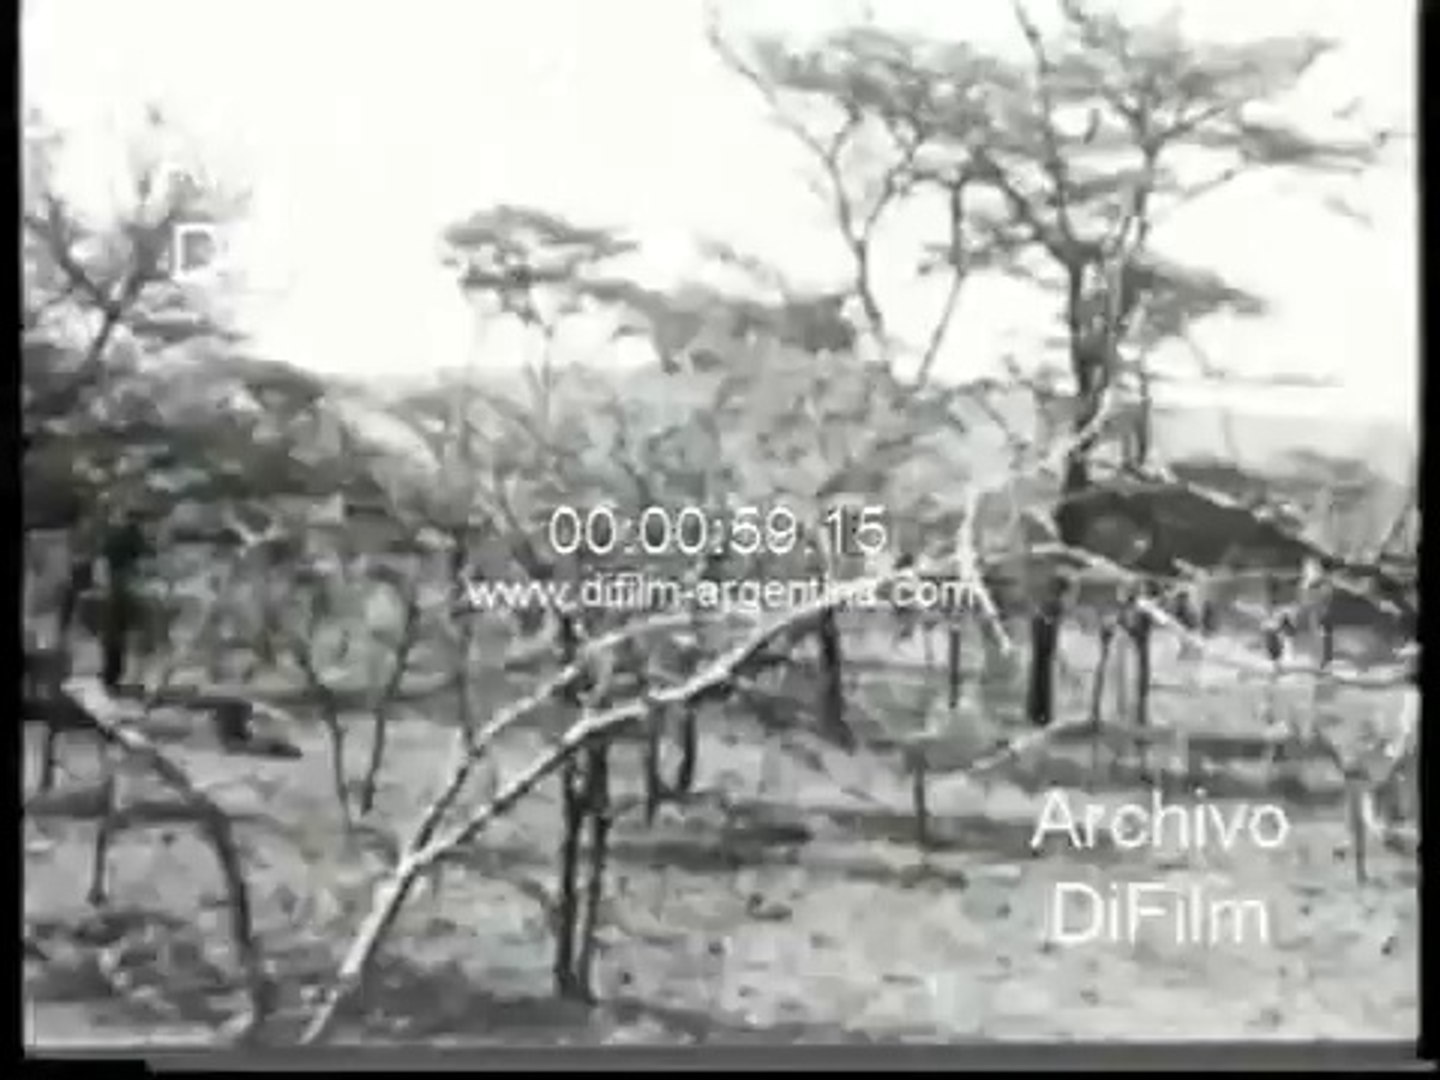 DiFilm - Stampede zebras antelopes wildebeest in Africa 1969